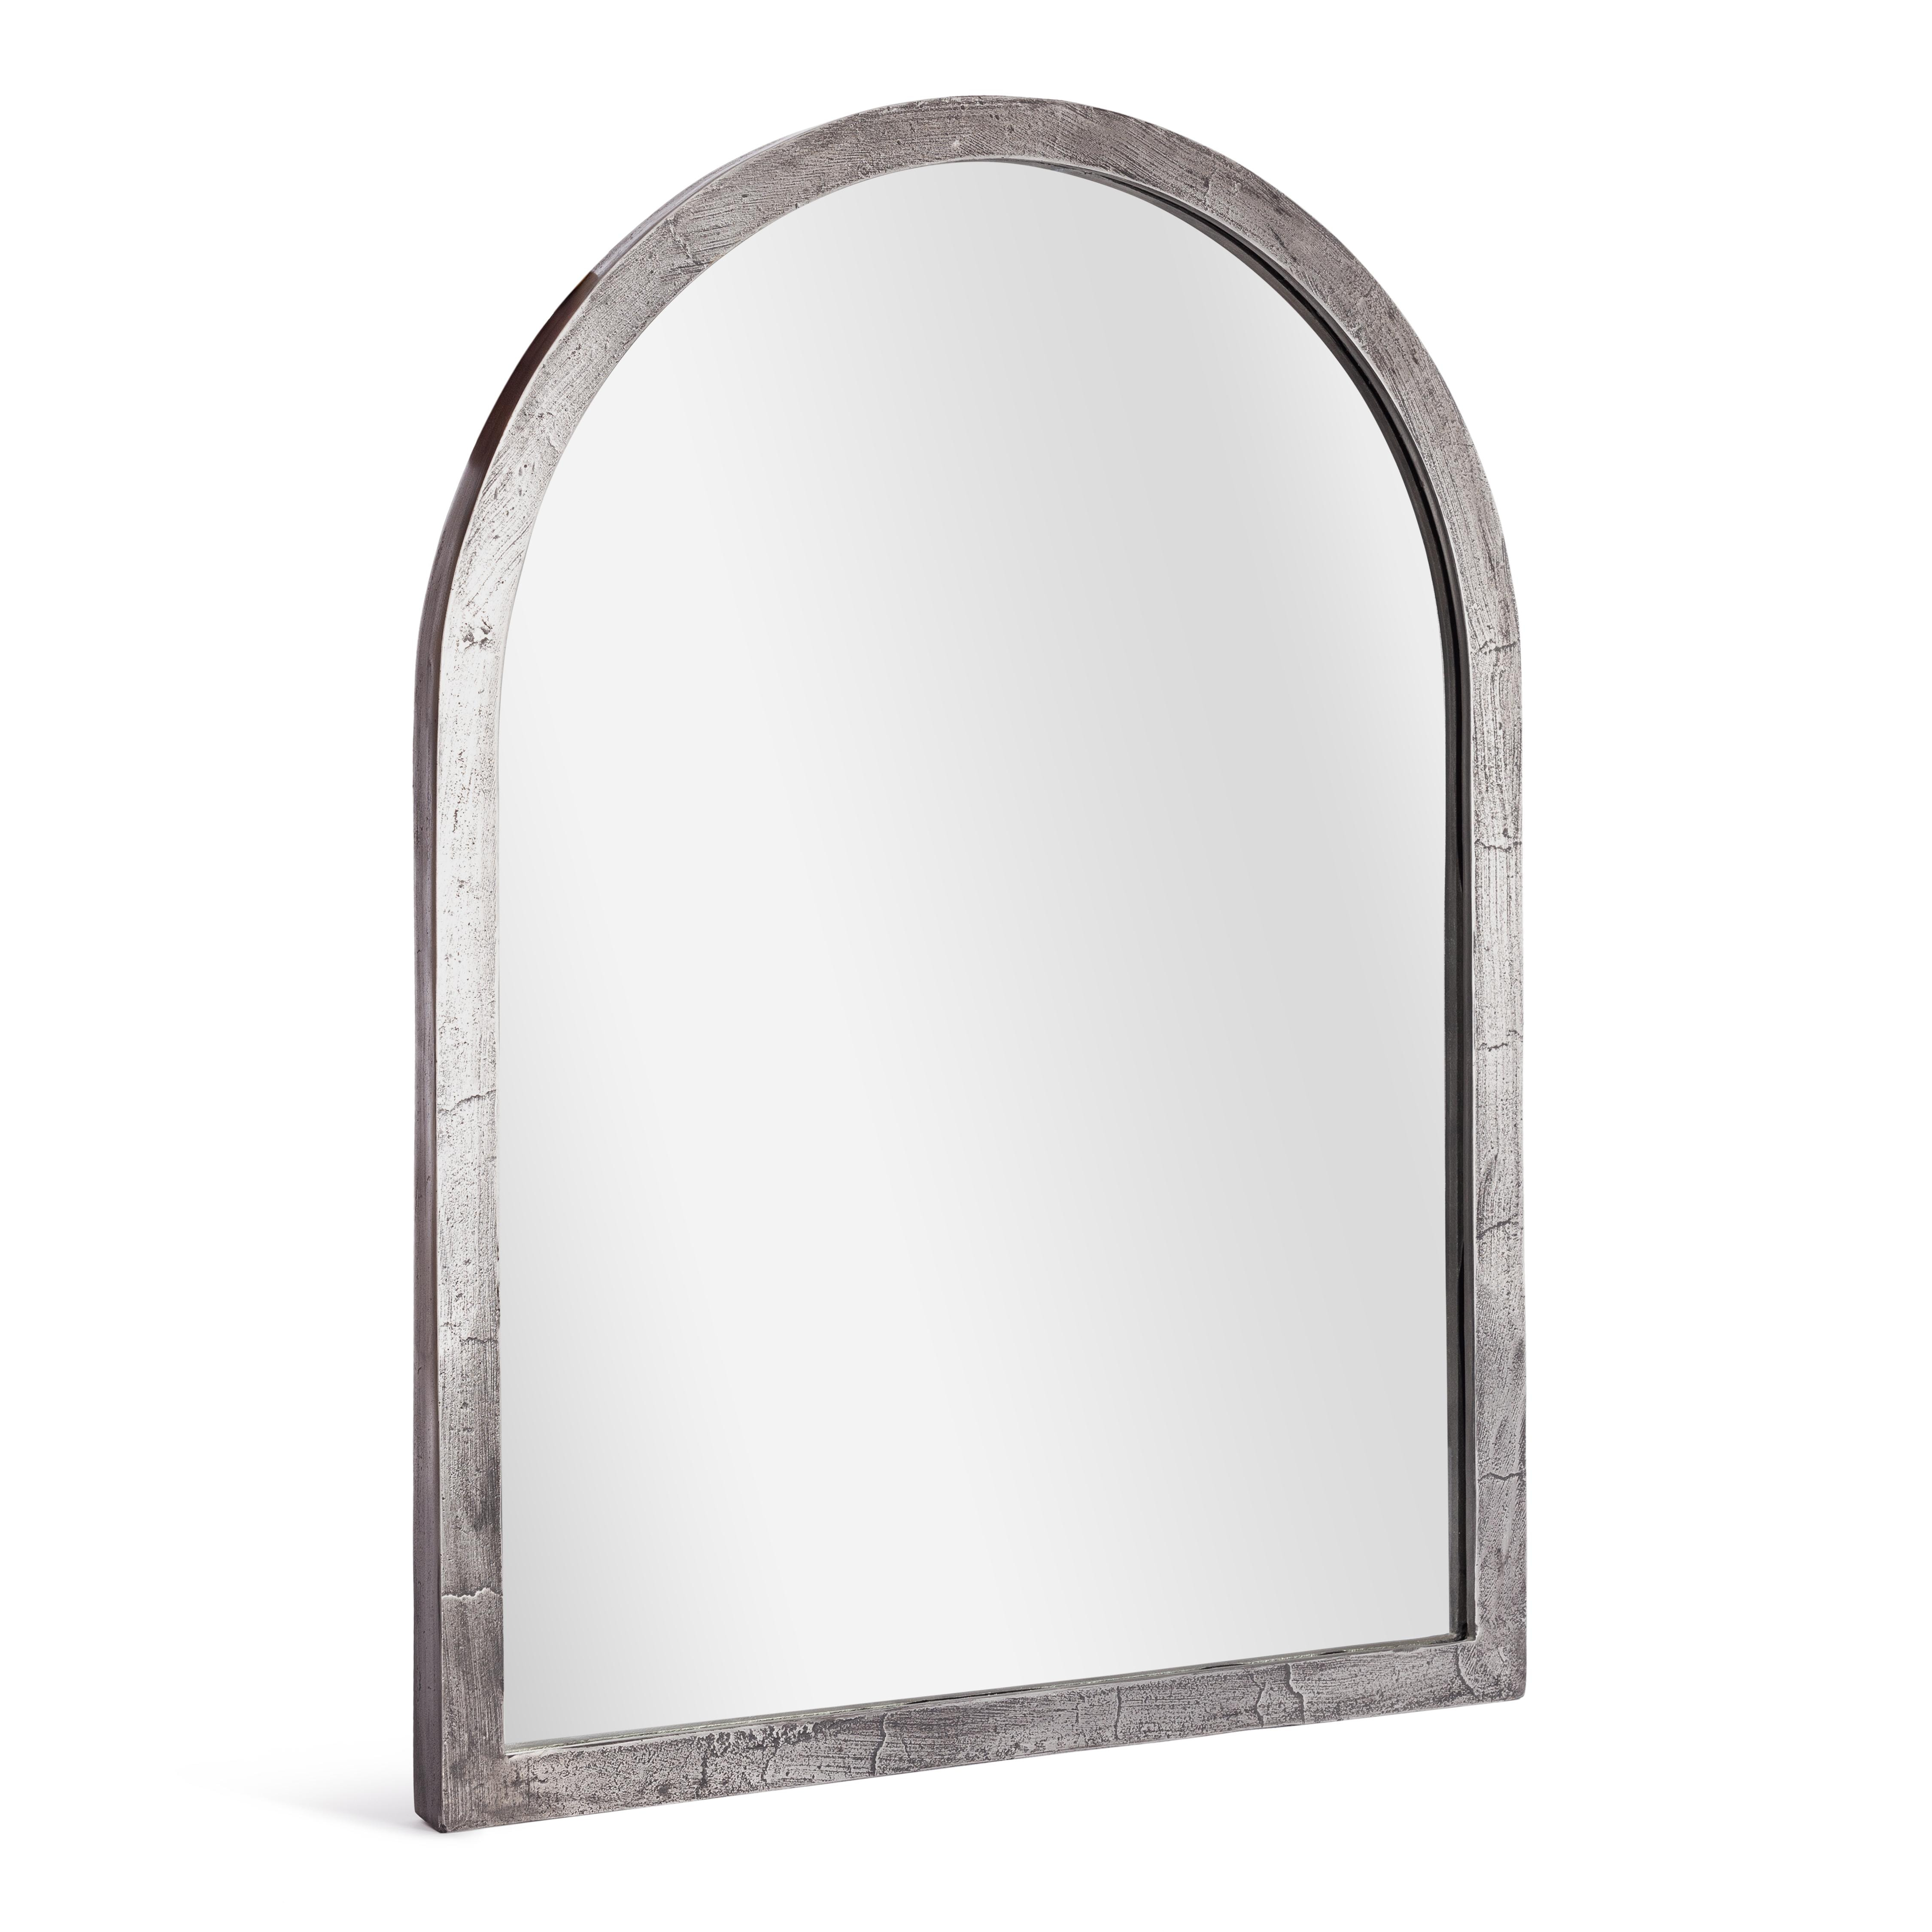 Зеркало Secret De Maison WINDOW ( mod. LS-0170 ) металл: аллюминий, стекло, мдф, 60 х 80 х 5 см, серебряный